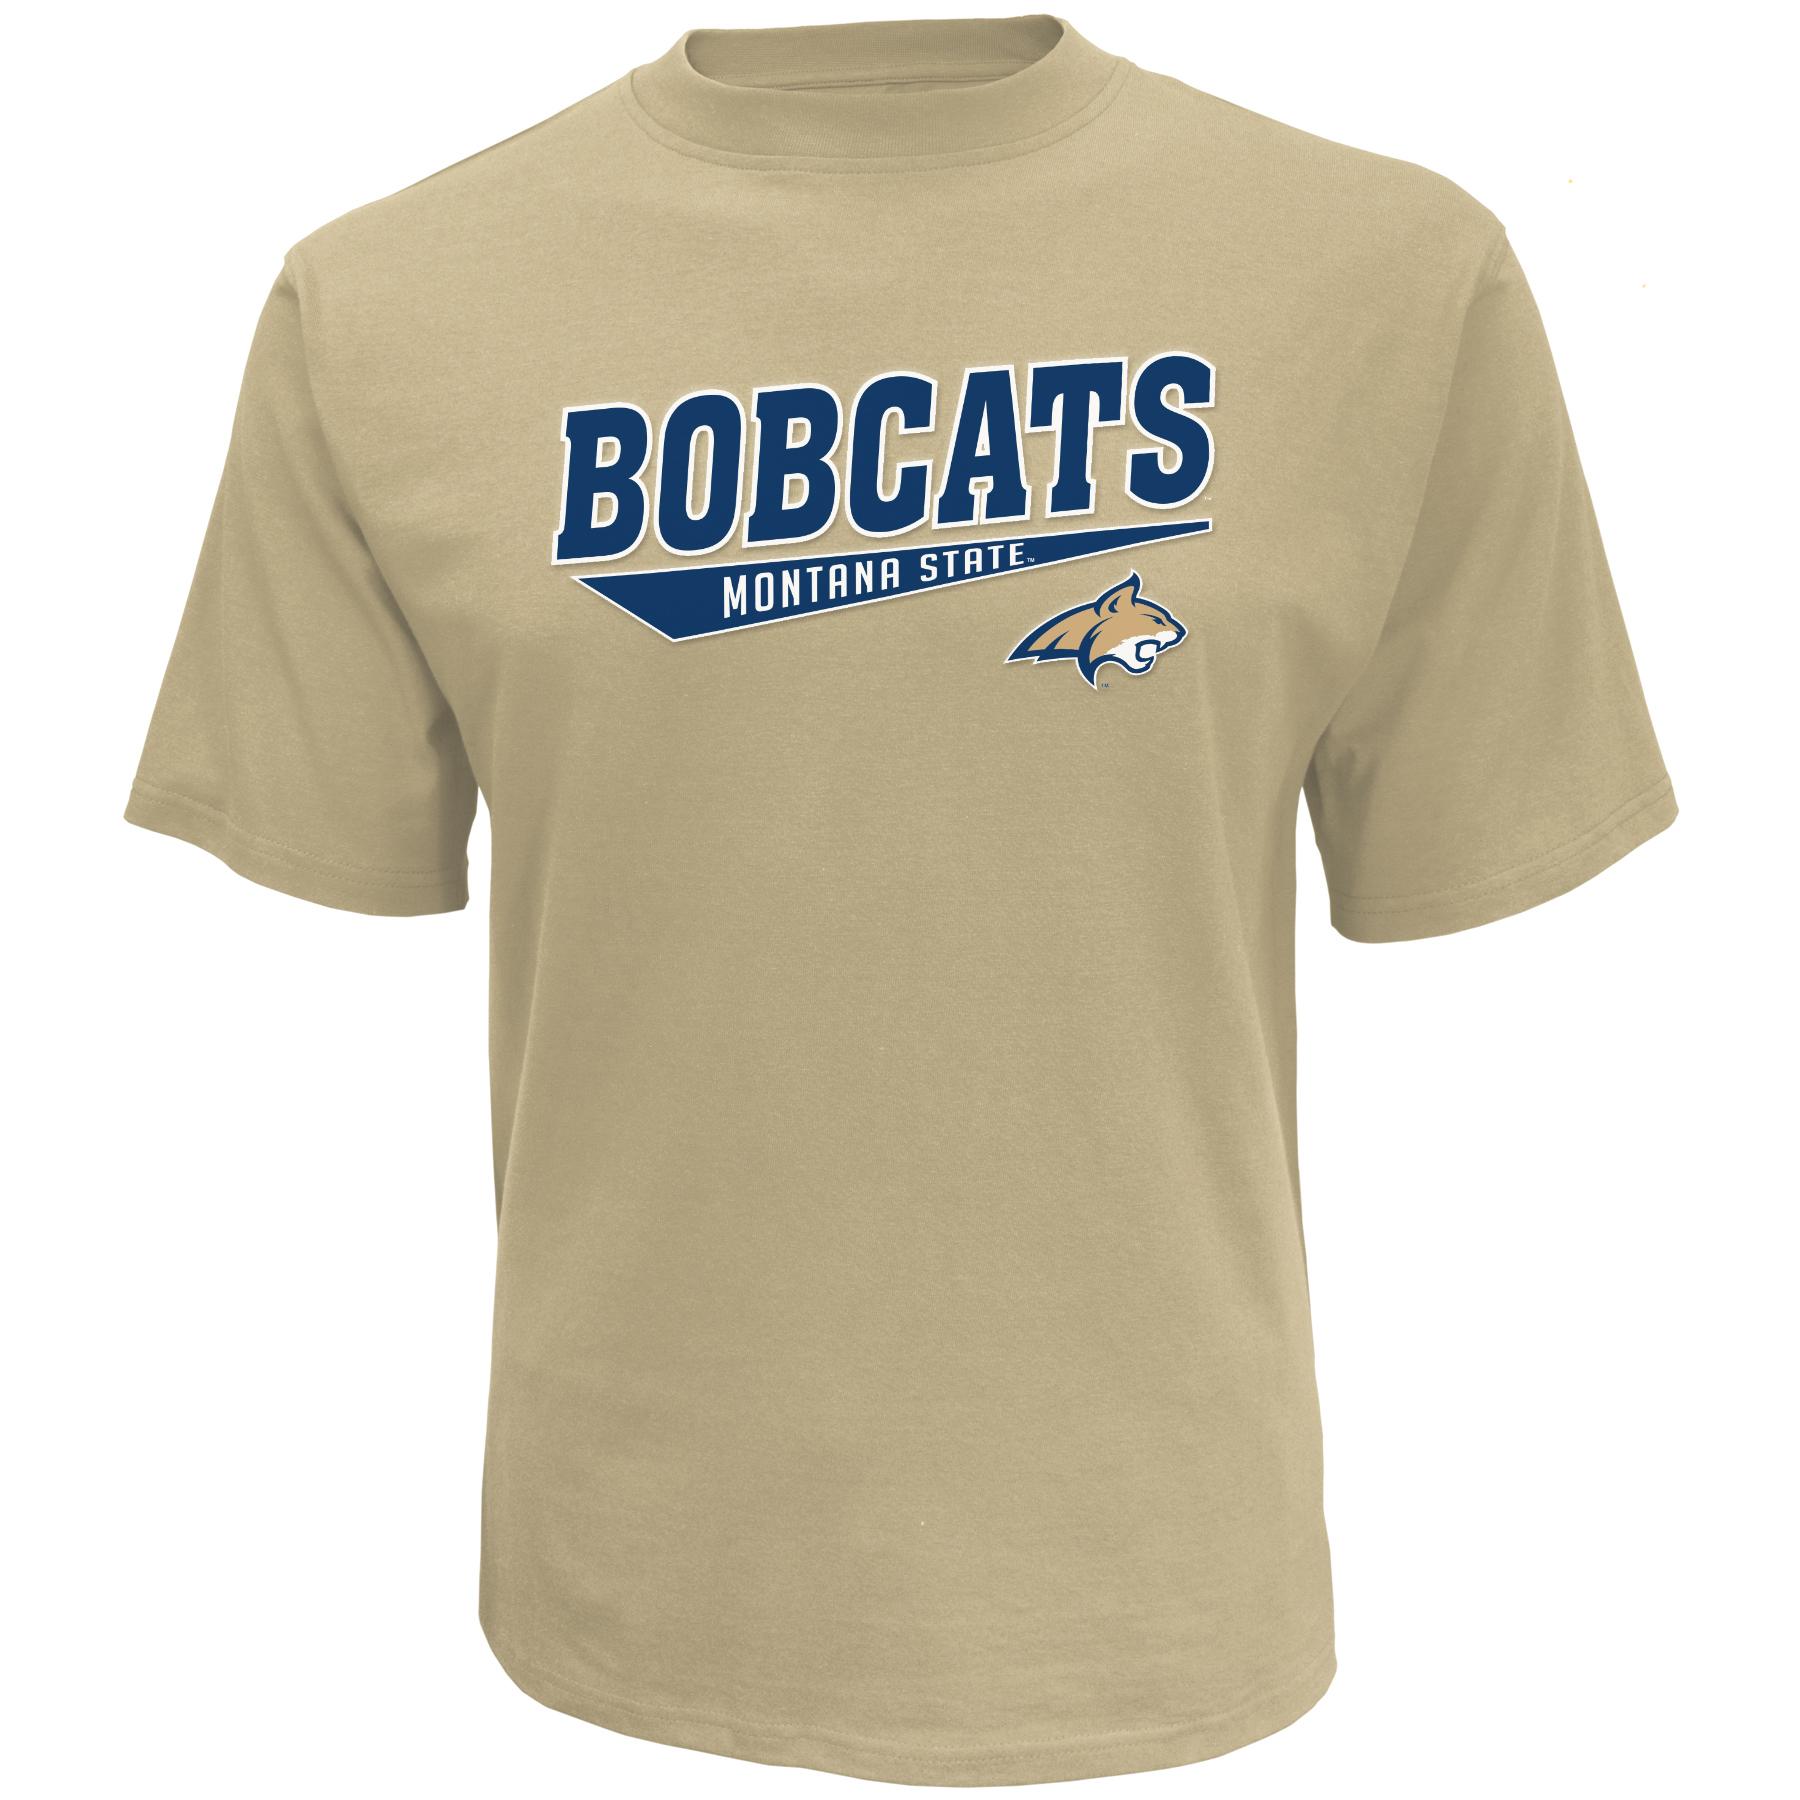 NCAA Men's T-Shirt - Montana State University Bobcats